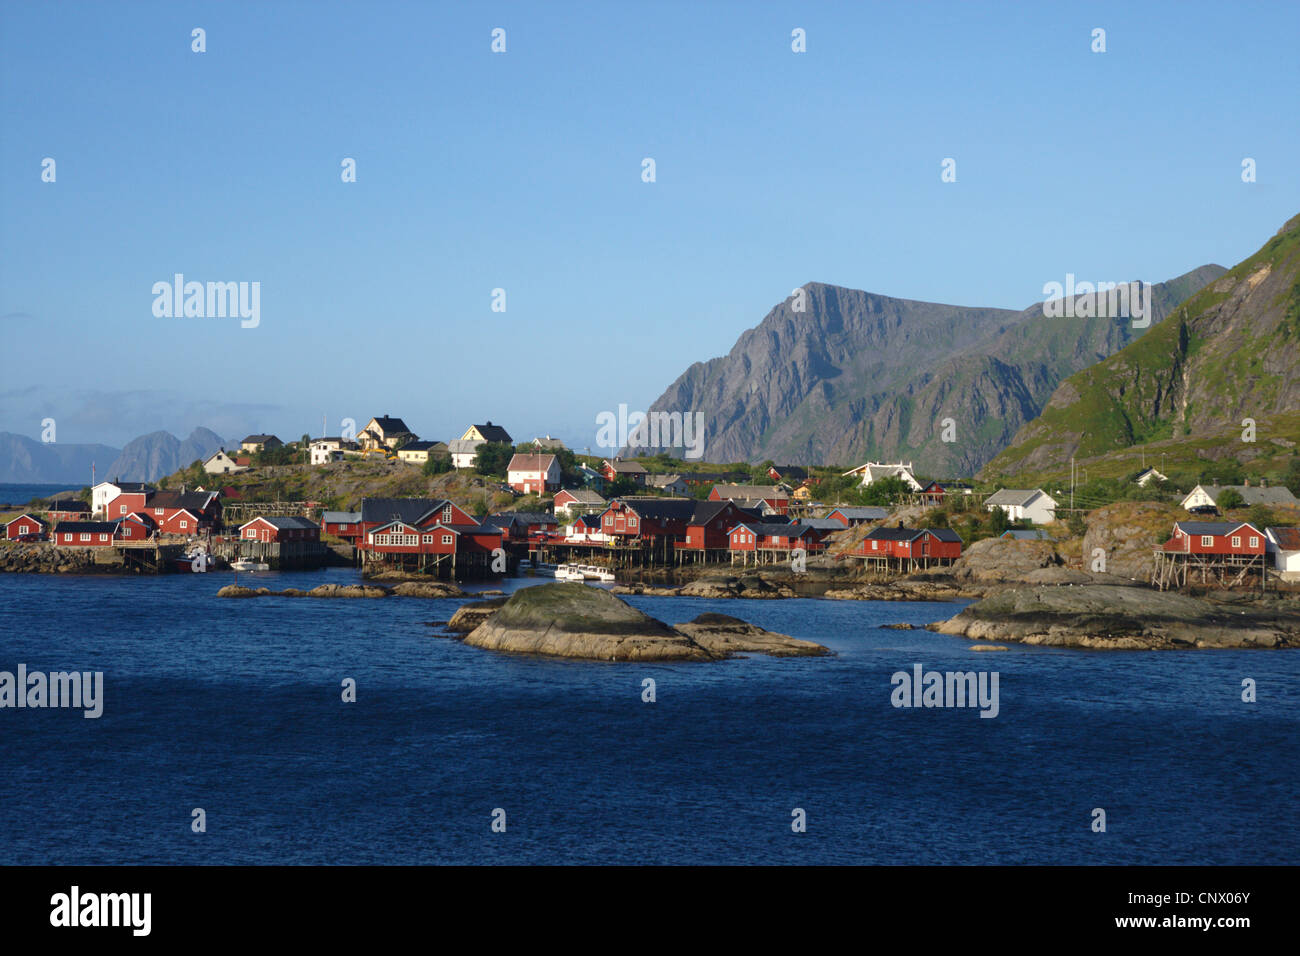 Angeln, Dorf A, Norwegen, Lofoten-Inseln Stockfoto